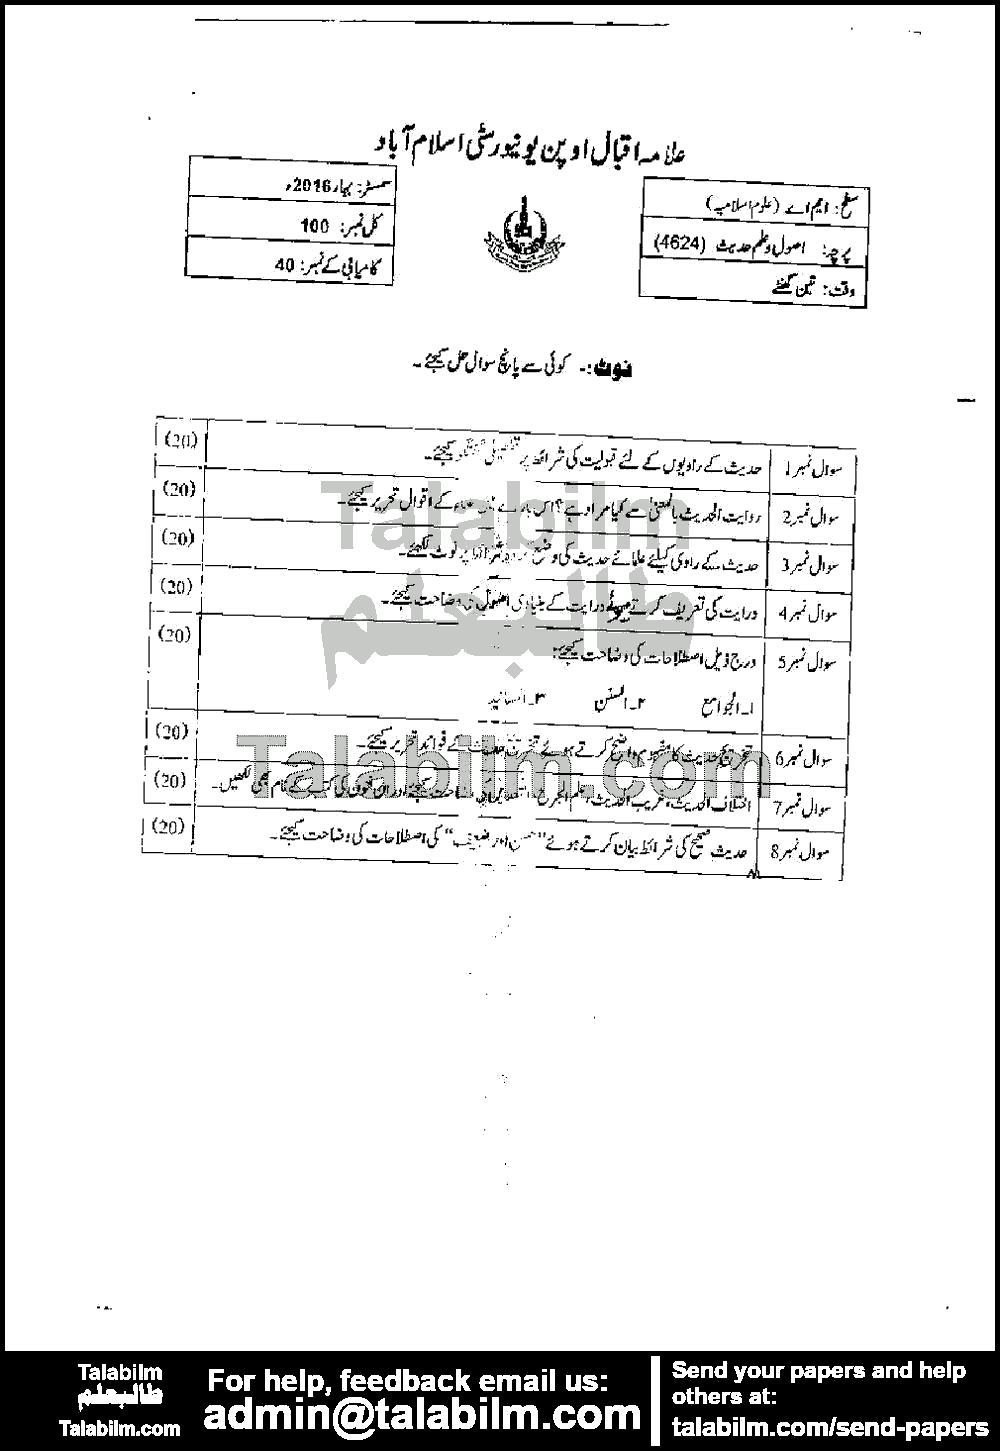 Al-Qawaid Fil Hadith-II 4624 past paper for Spring 2016